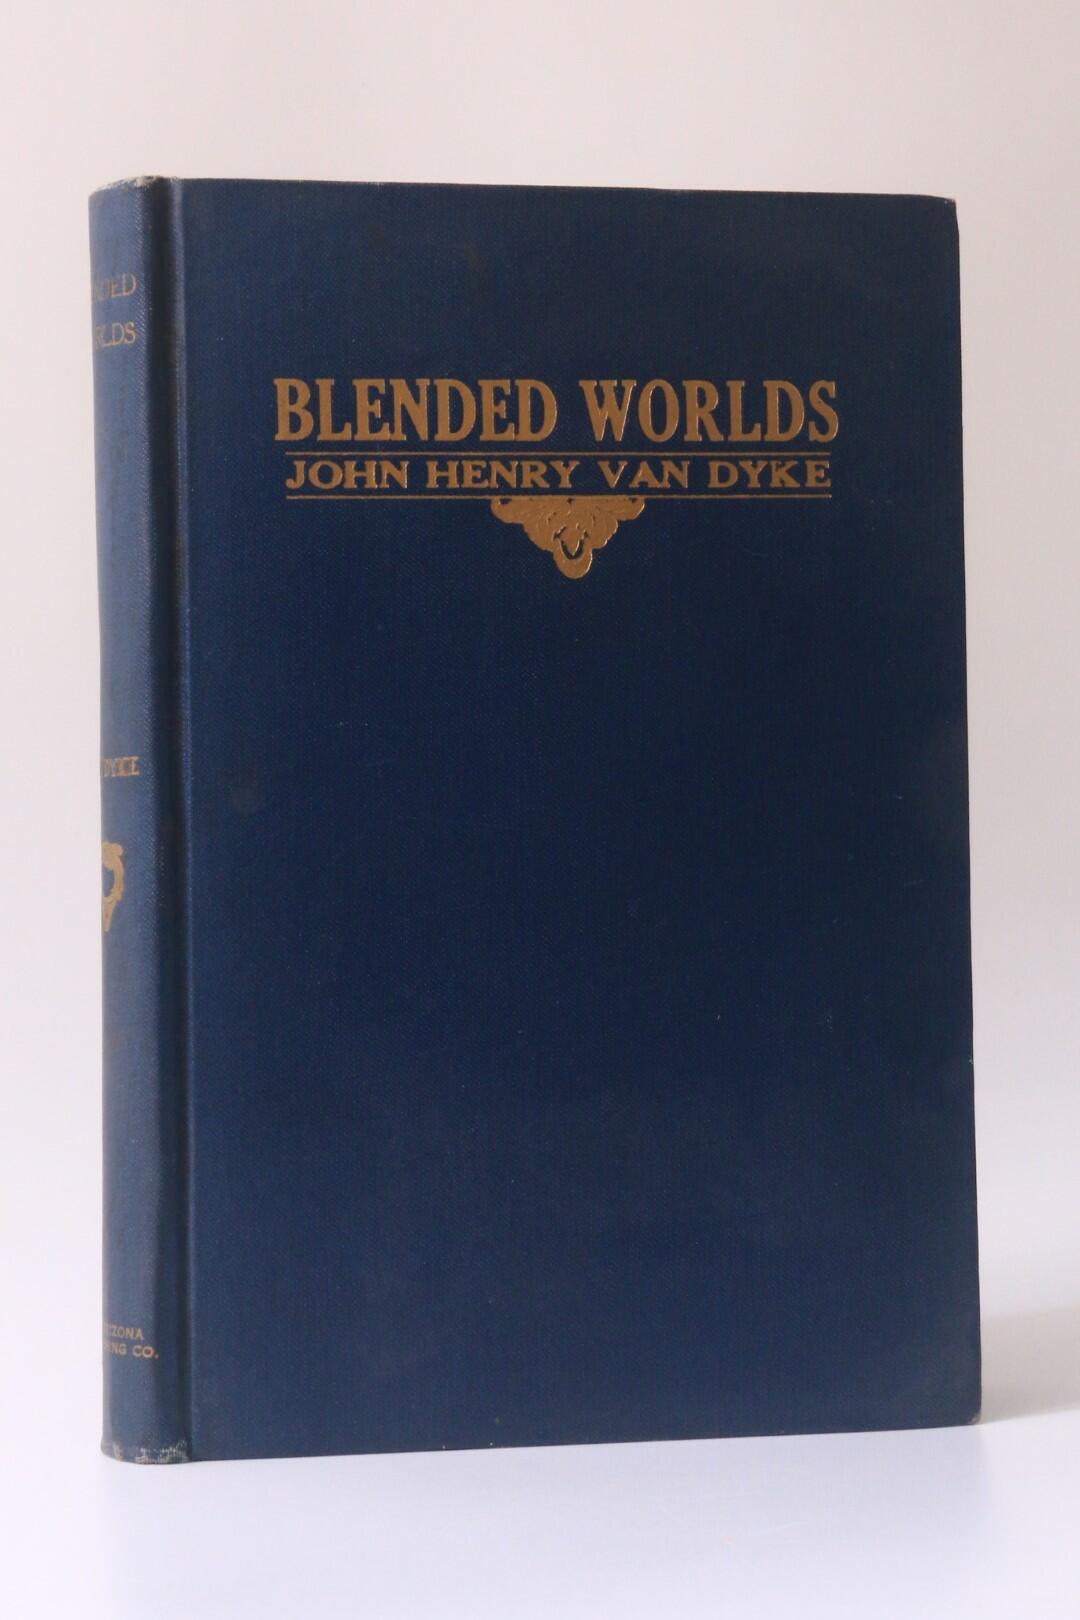 John Henry van Dyke - Blended Worlds - Southern Arizona Publishing Co., 1927, Signed Limited Edition.